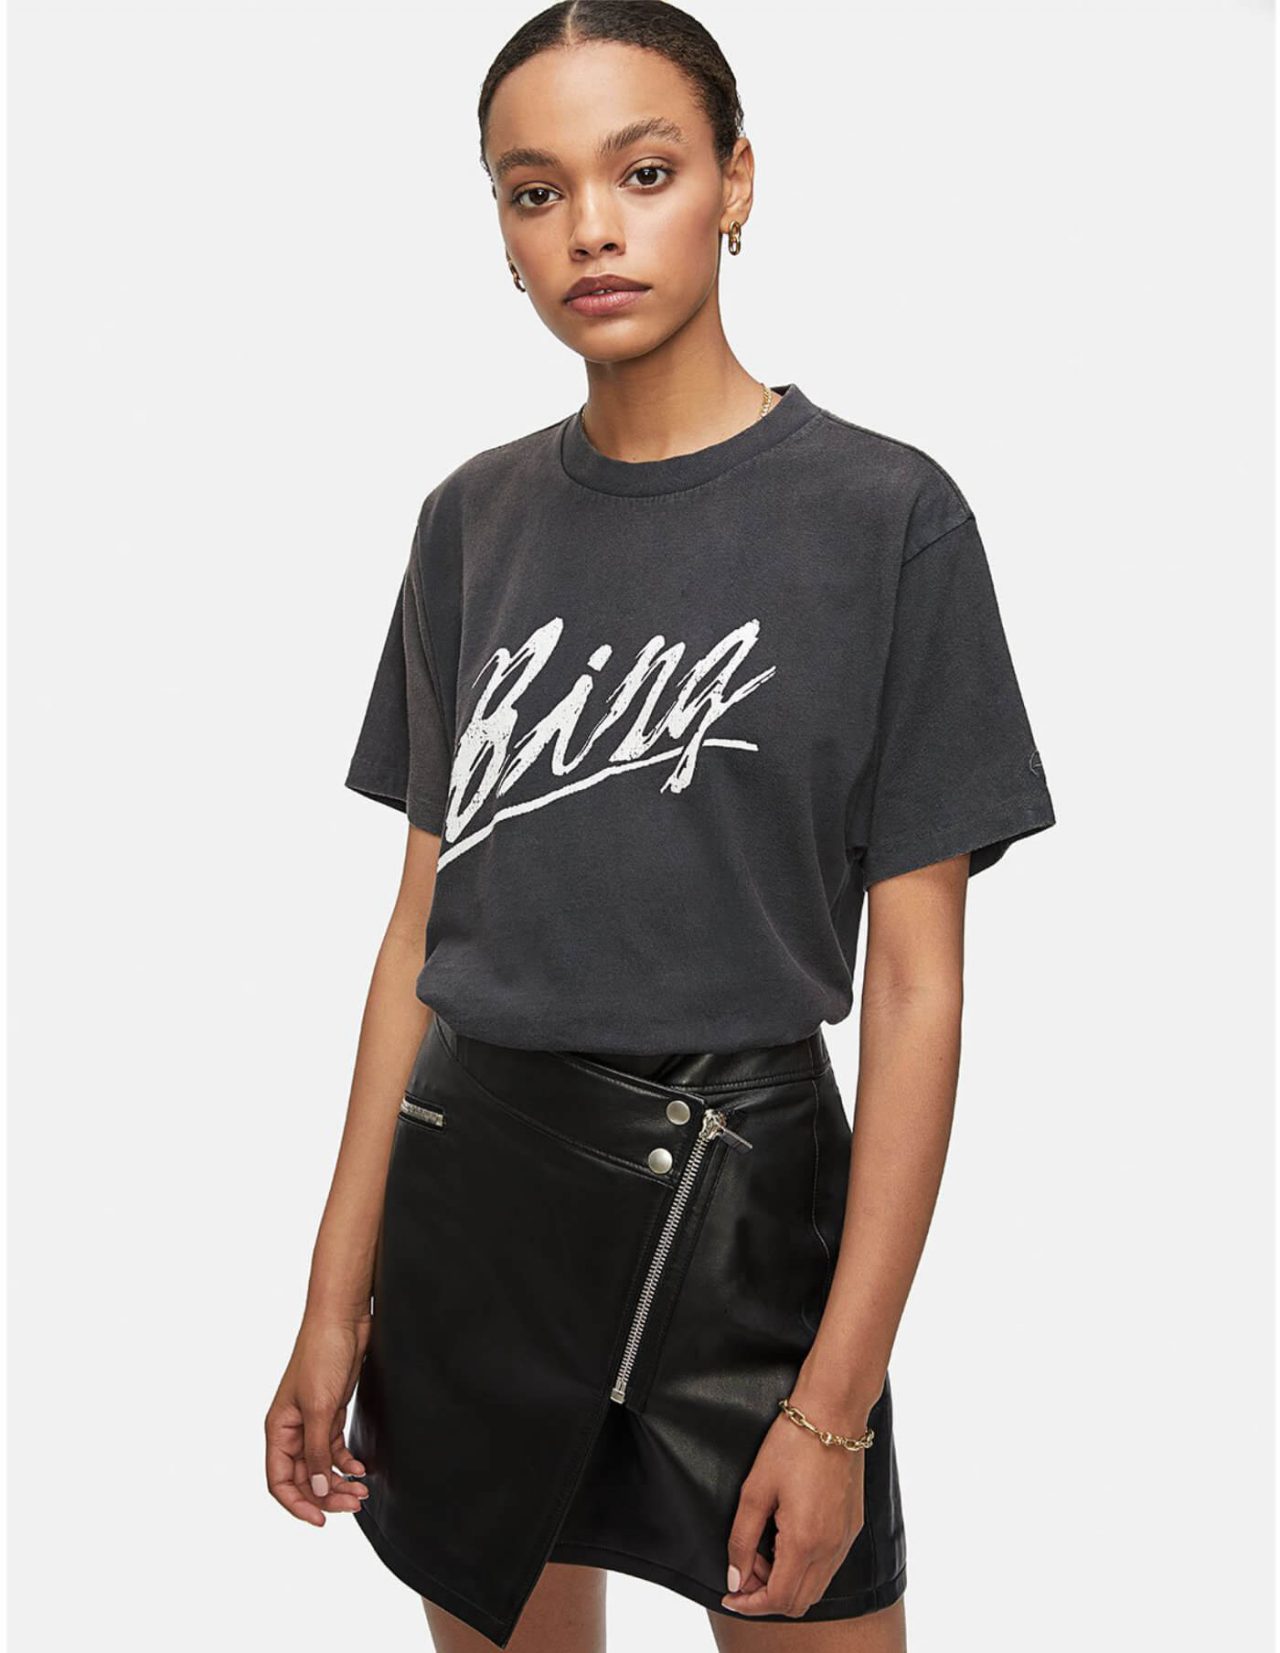 Anine Bing Basic Bing Tshirt In Black at Storm Fashion